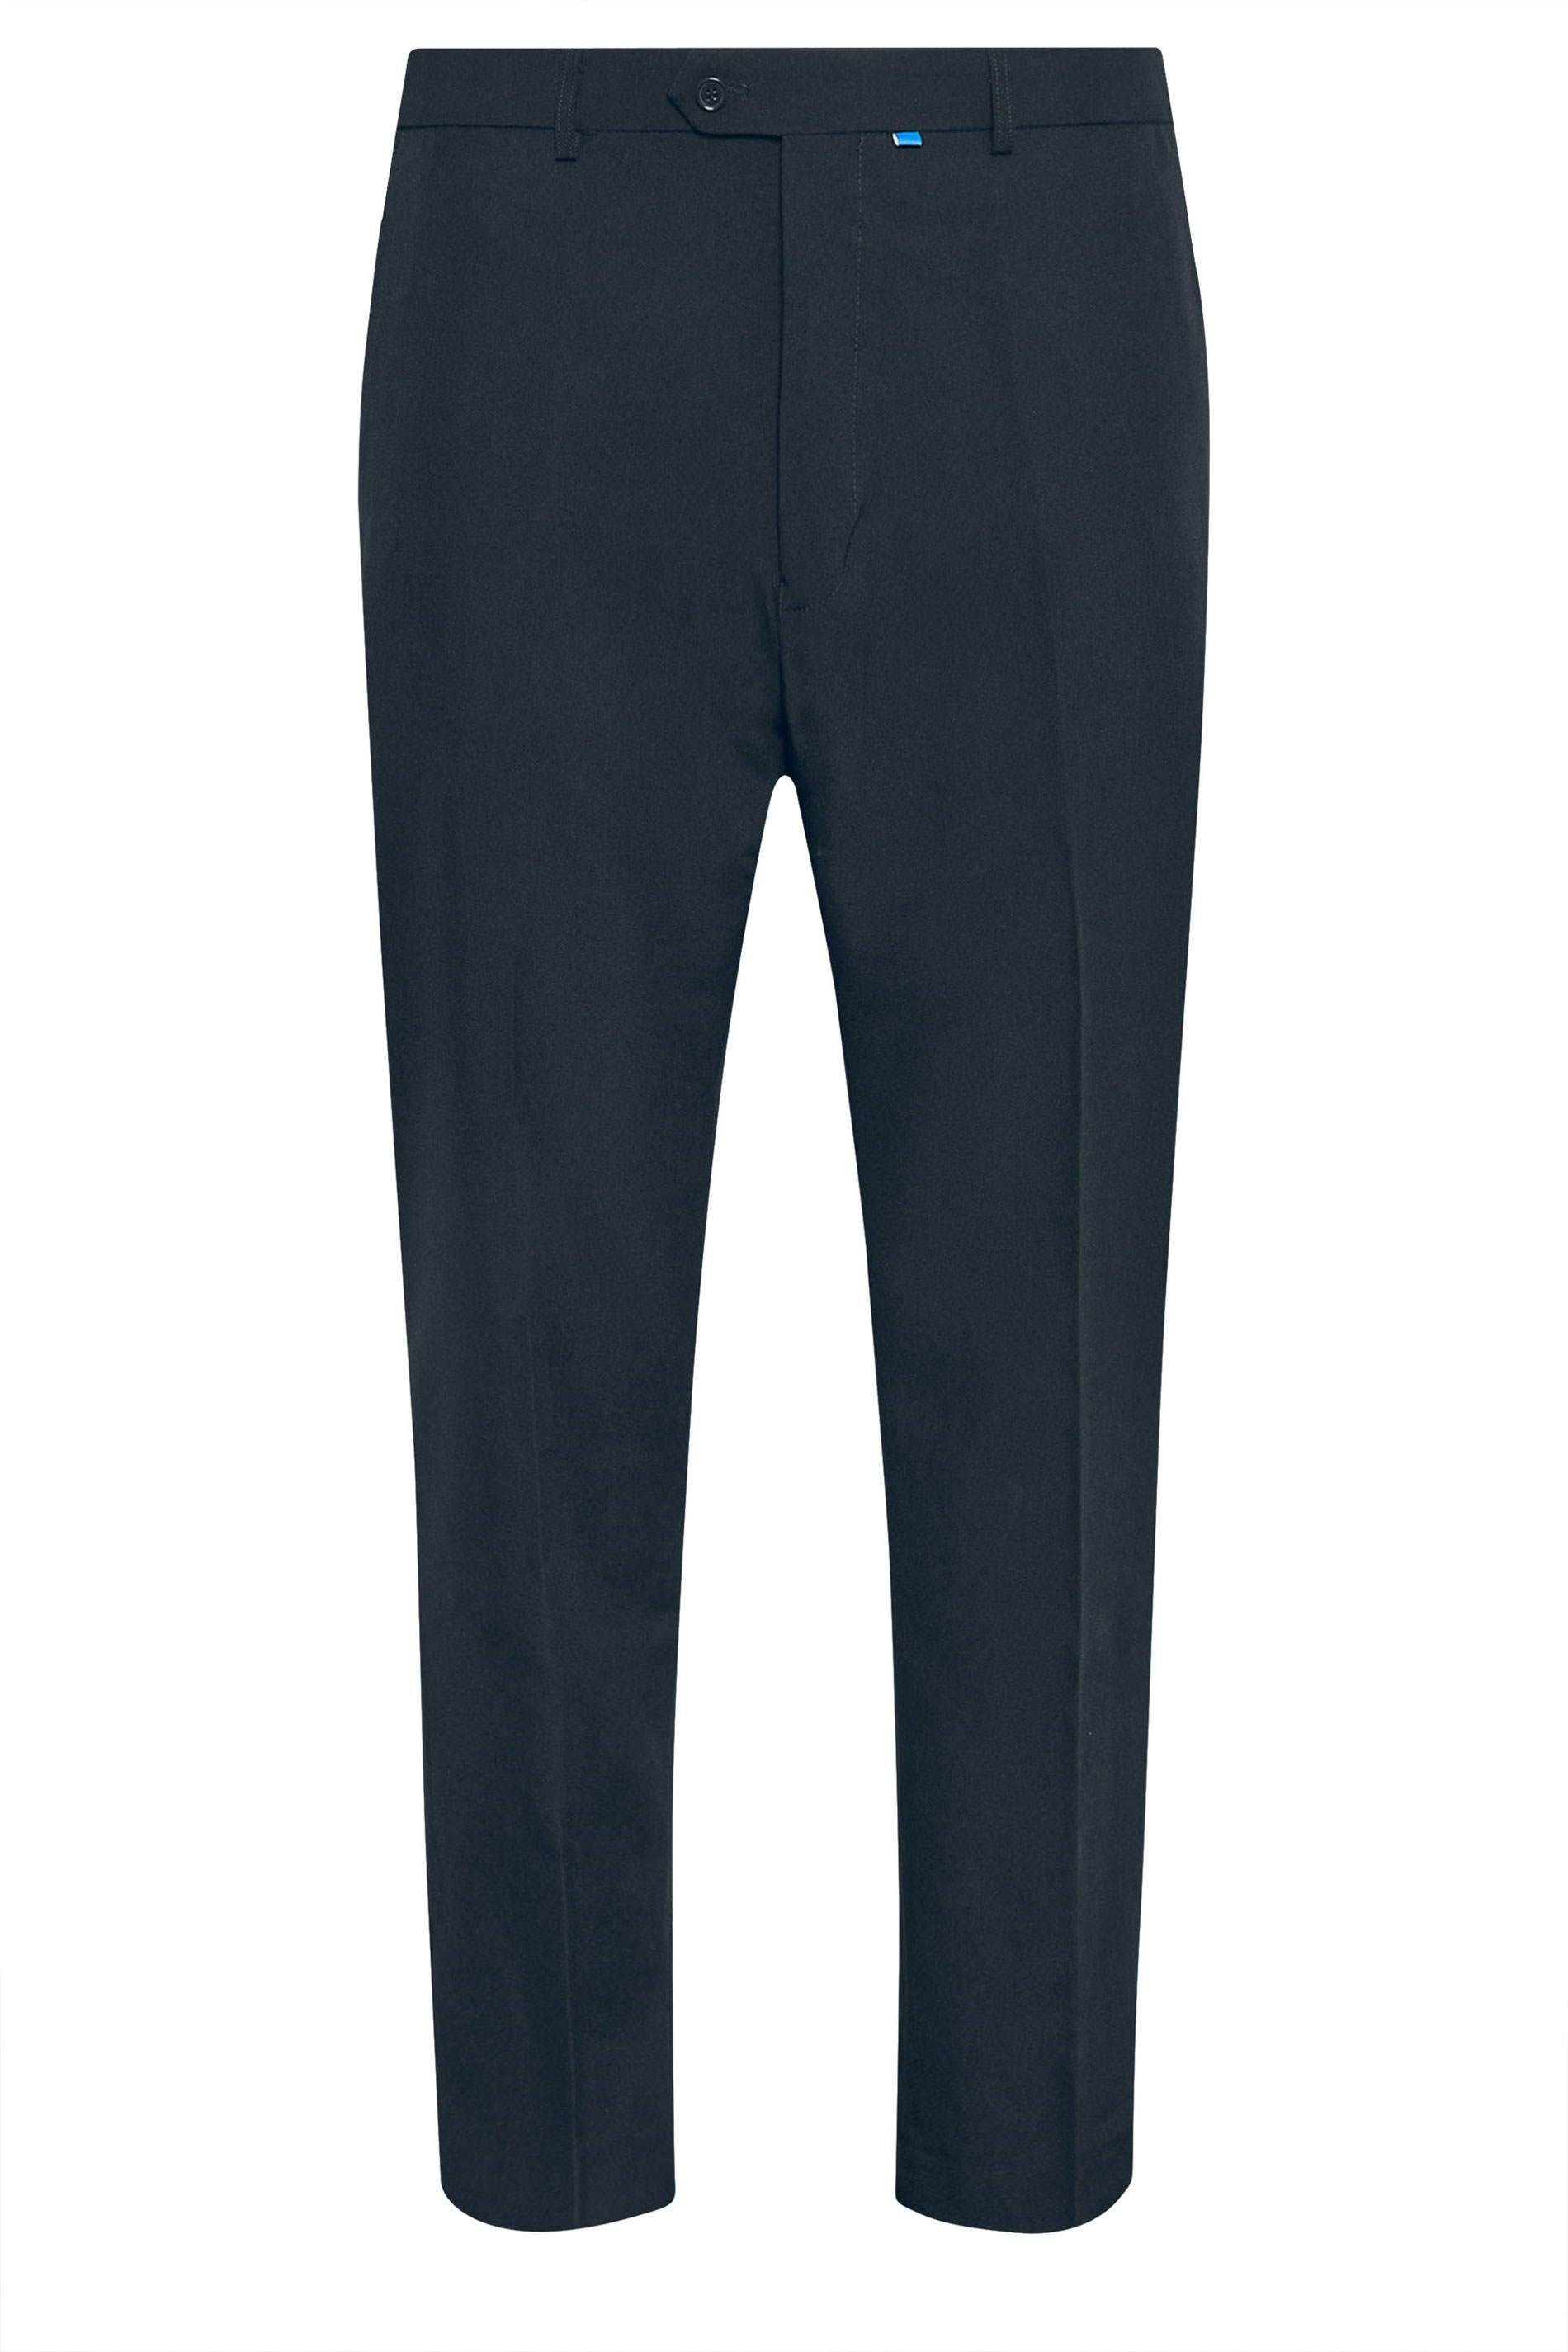 D555 Big & Tall Navy Blue Side Adjustable Waist Trouser | BadRhino